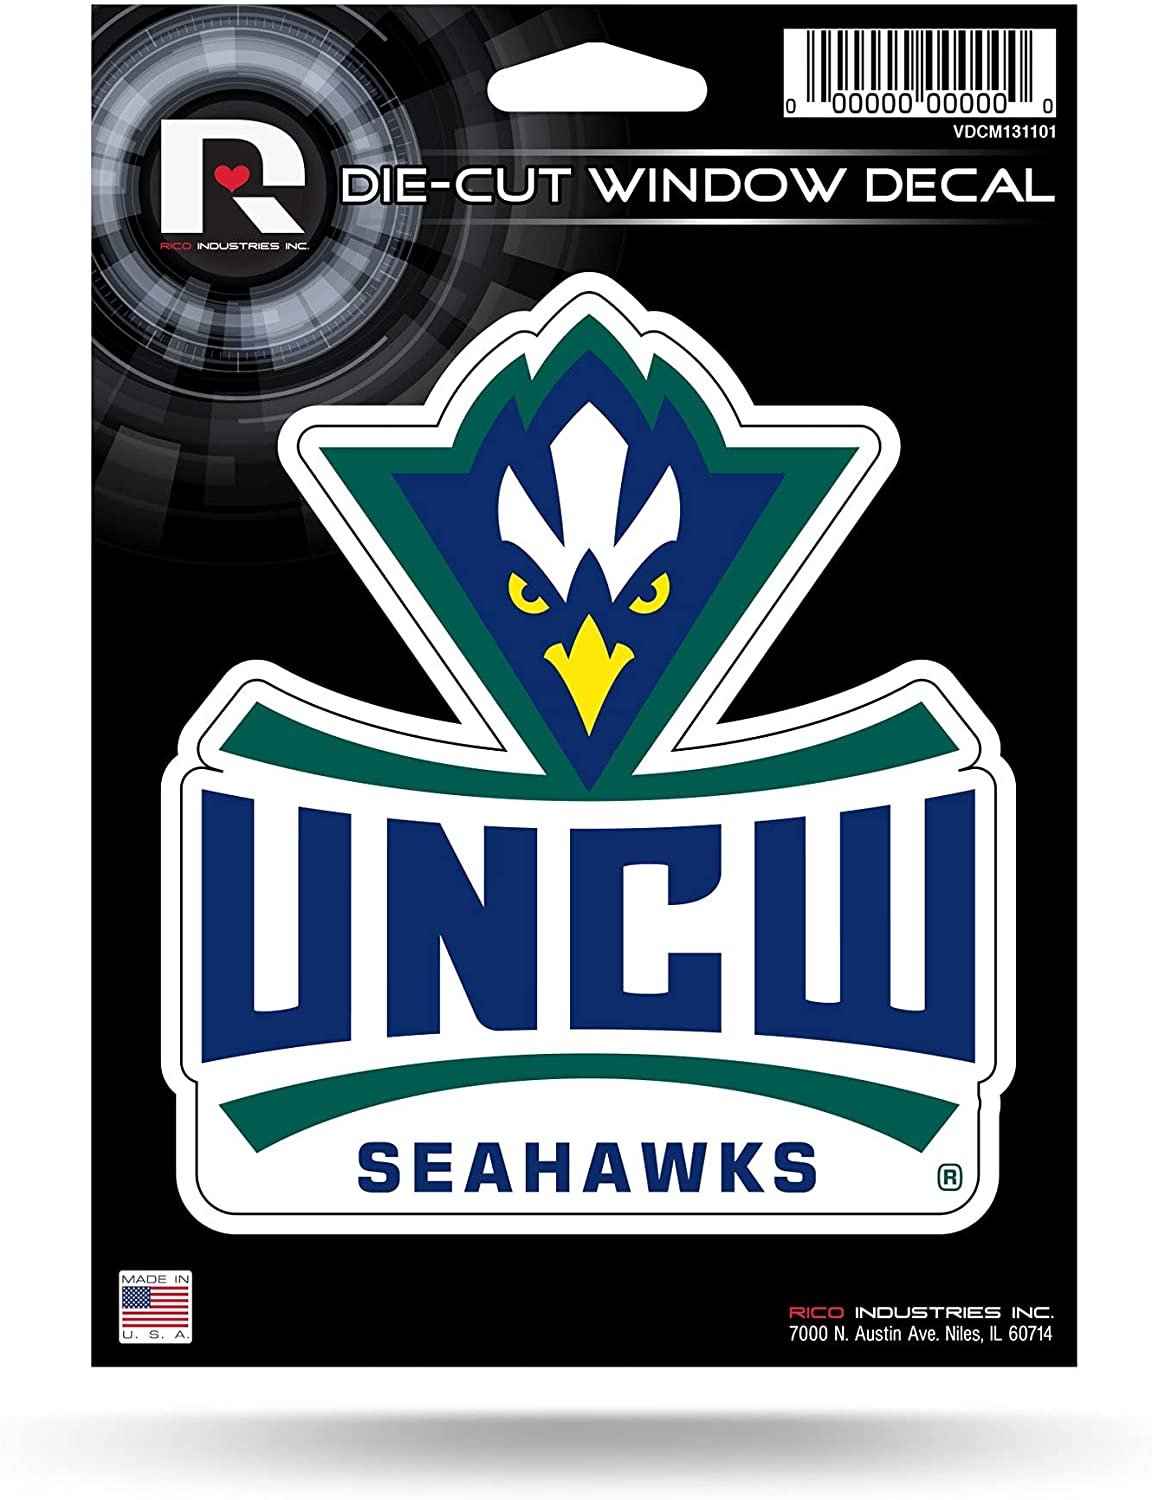 University of North Carolina Wilmington Seahawks UNCW 5 Inch Die Cut Flat Vinyl Decal Sticker Adhesive Backing